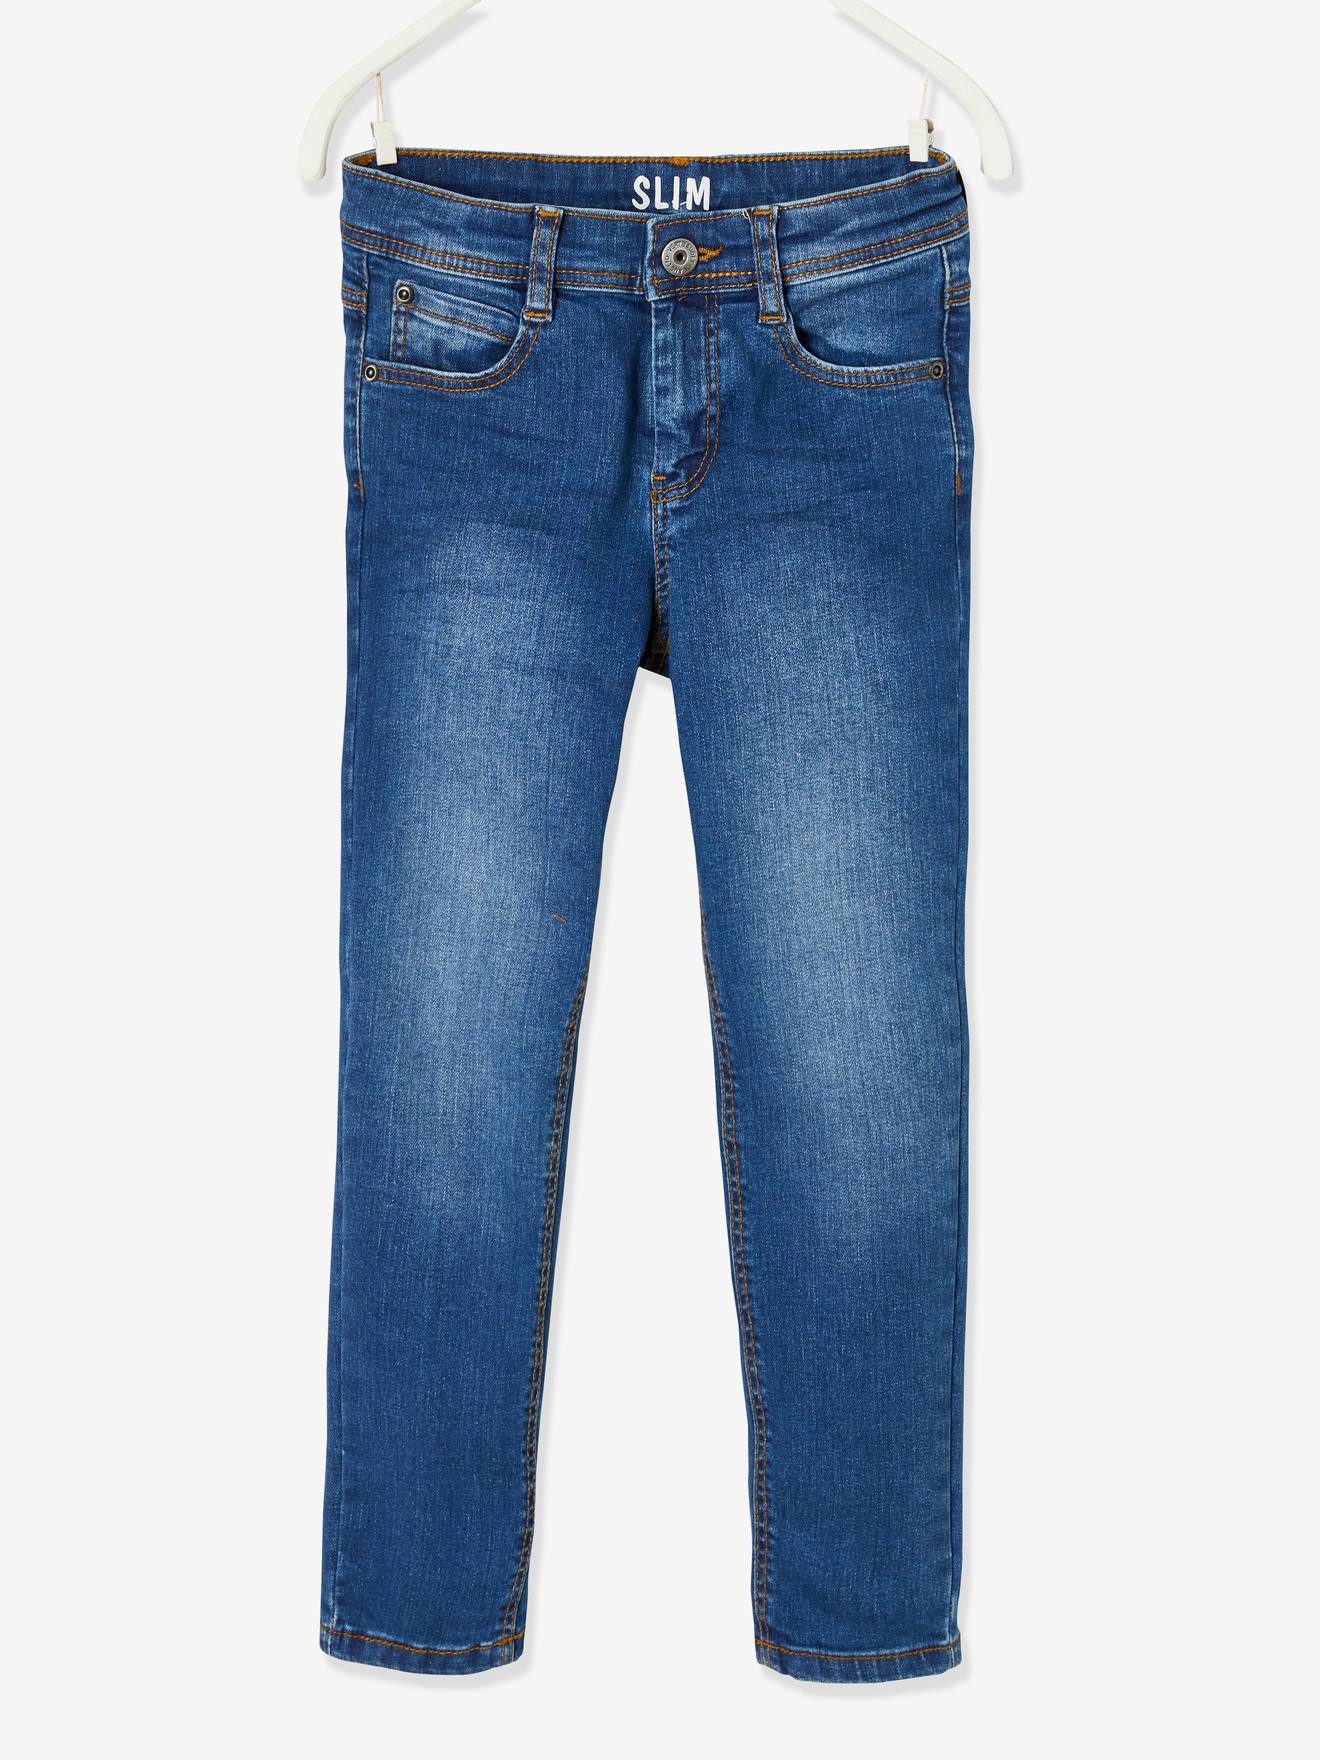 Jeans slim morfológicos 'waterless', medida das ancas ESTREITA, para menino azul escuro desbotado